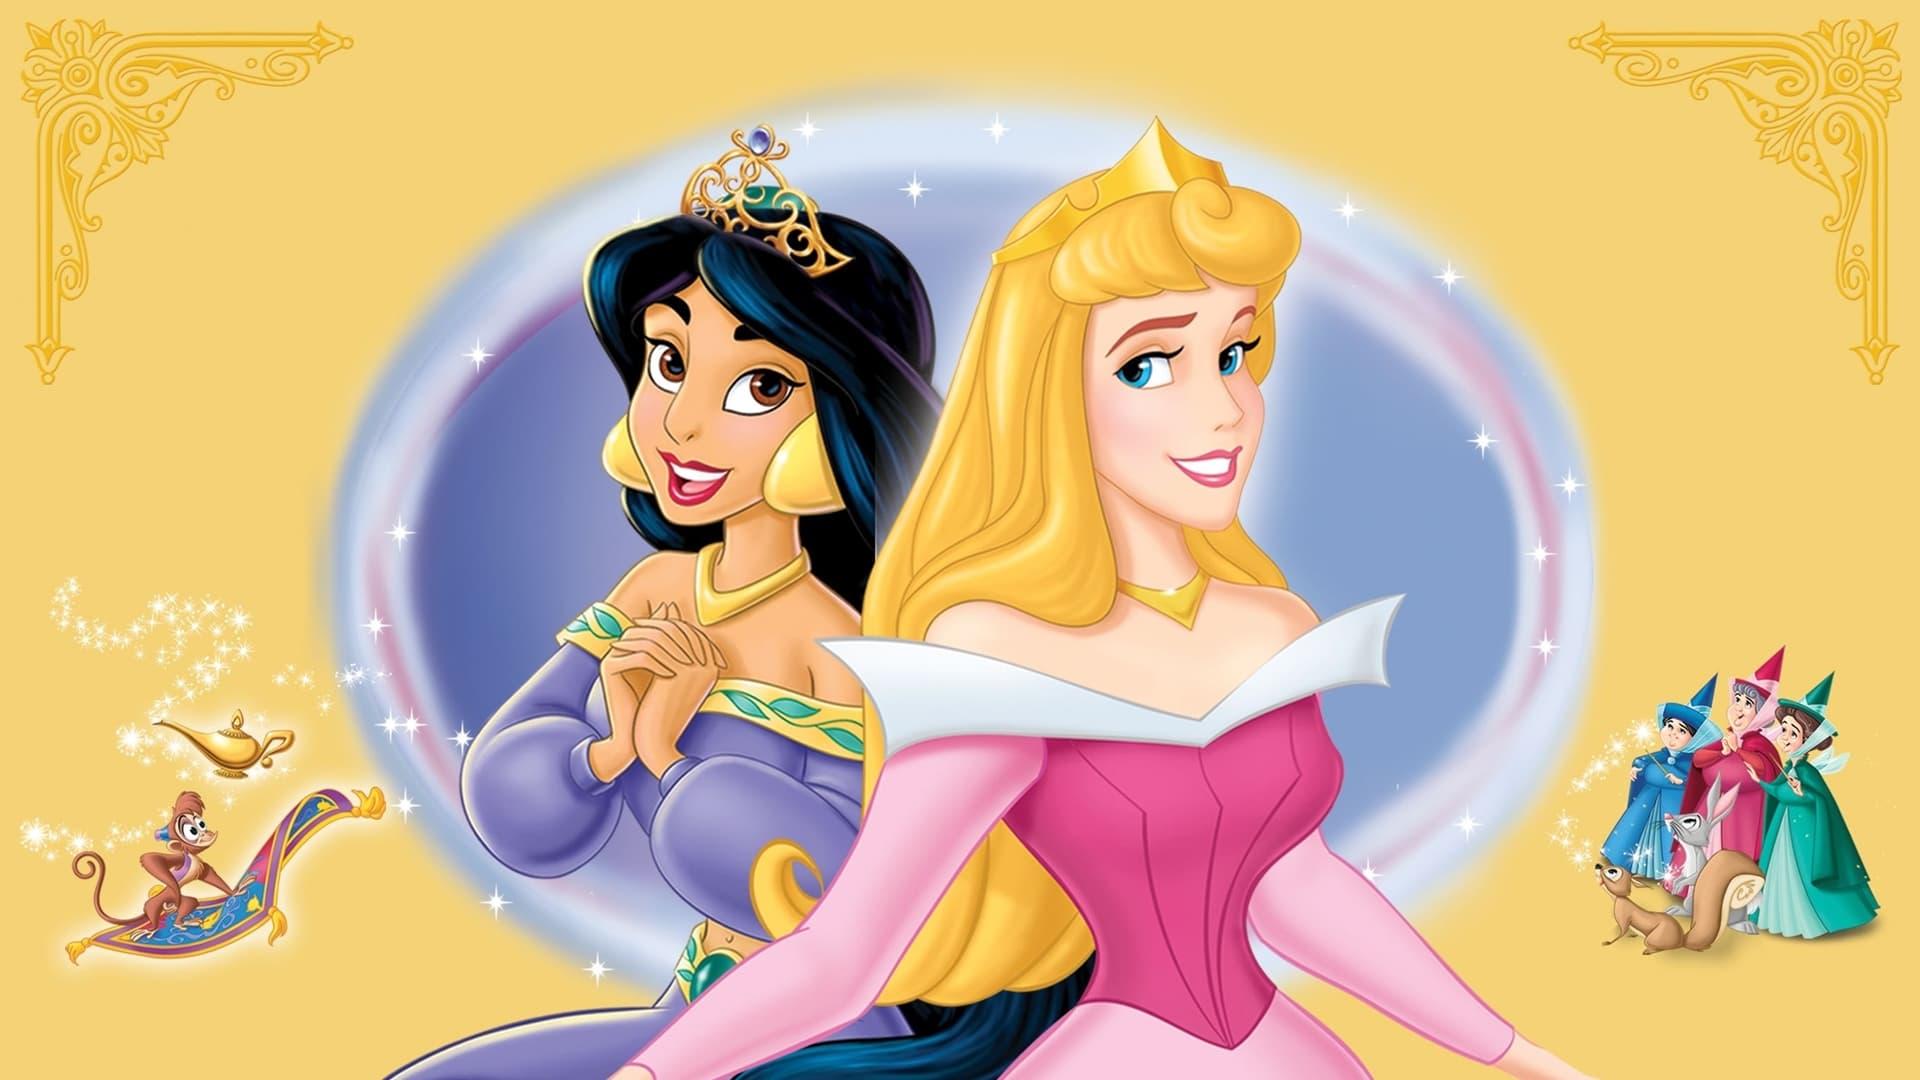 Disney Princess Enchanted Tales: Follow Your Dreams backdrop